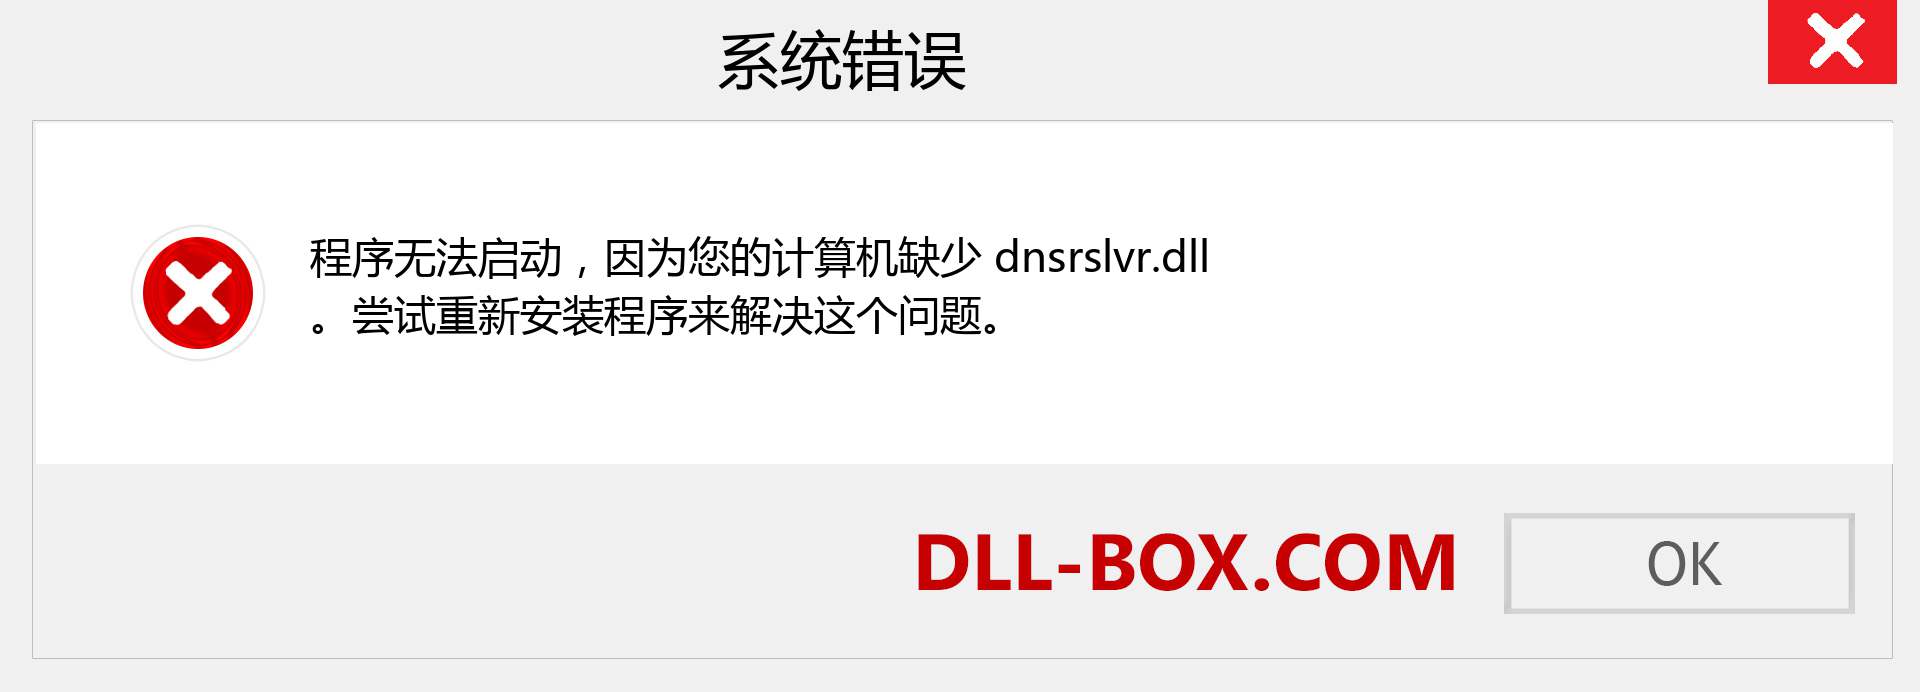 dnsrslvr.dll 文件丢失？。 适用于 Windows 7、8、10 的下载 - 修复 Windows、照片、图像上的 dnsrslvr dll 丢失错误